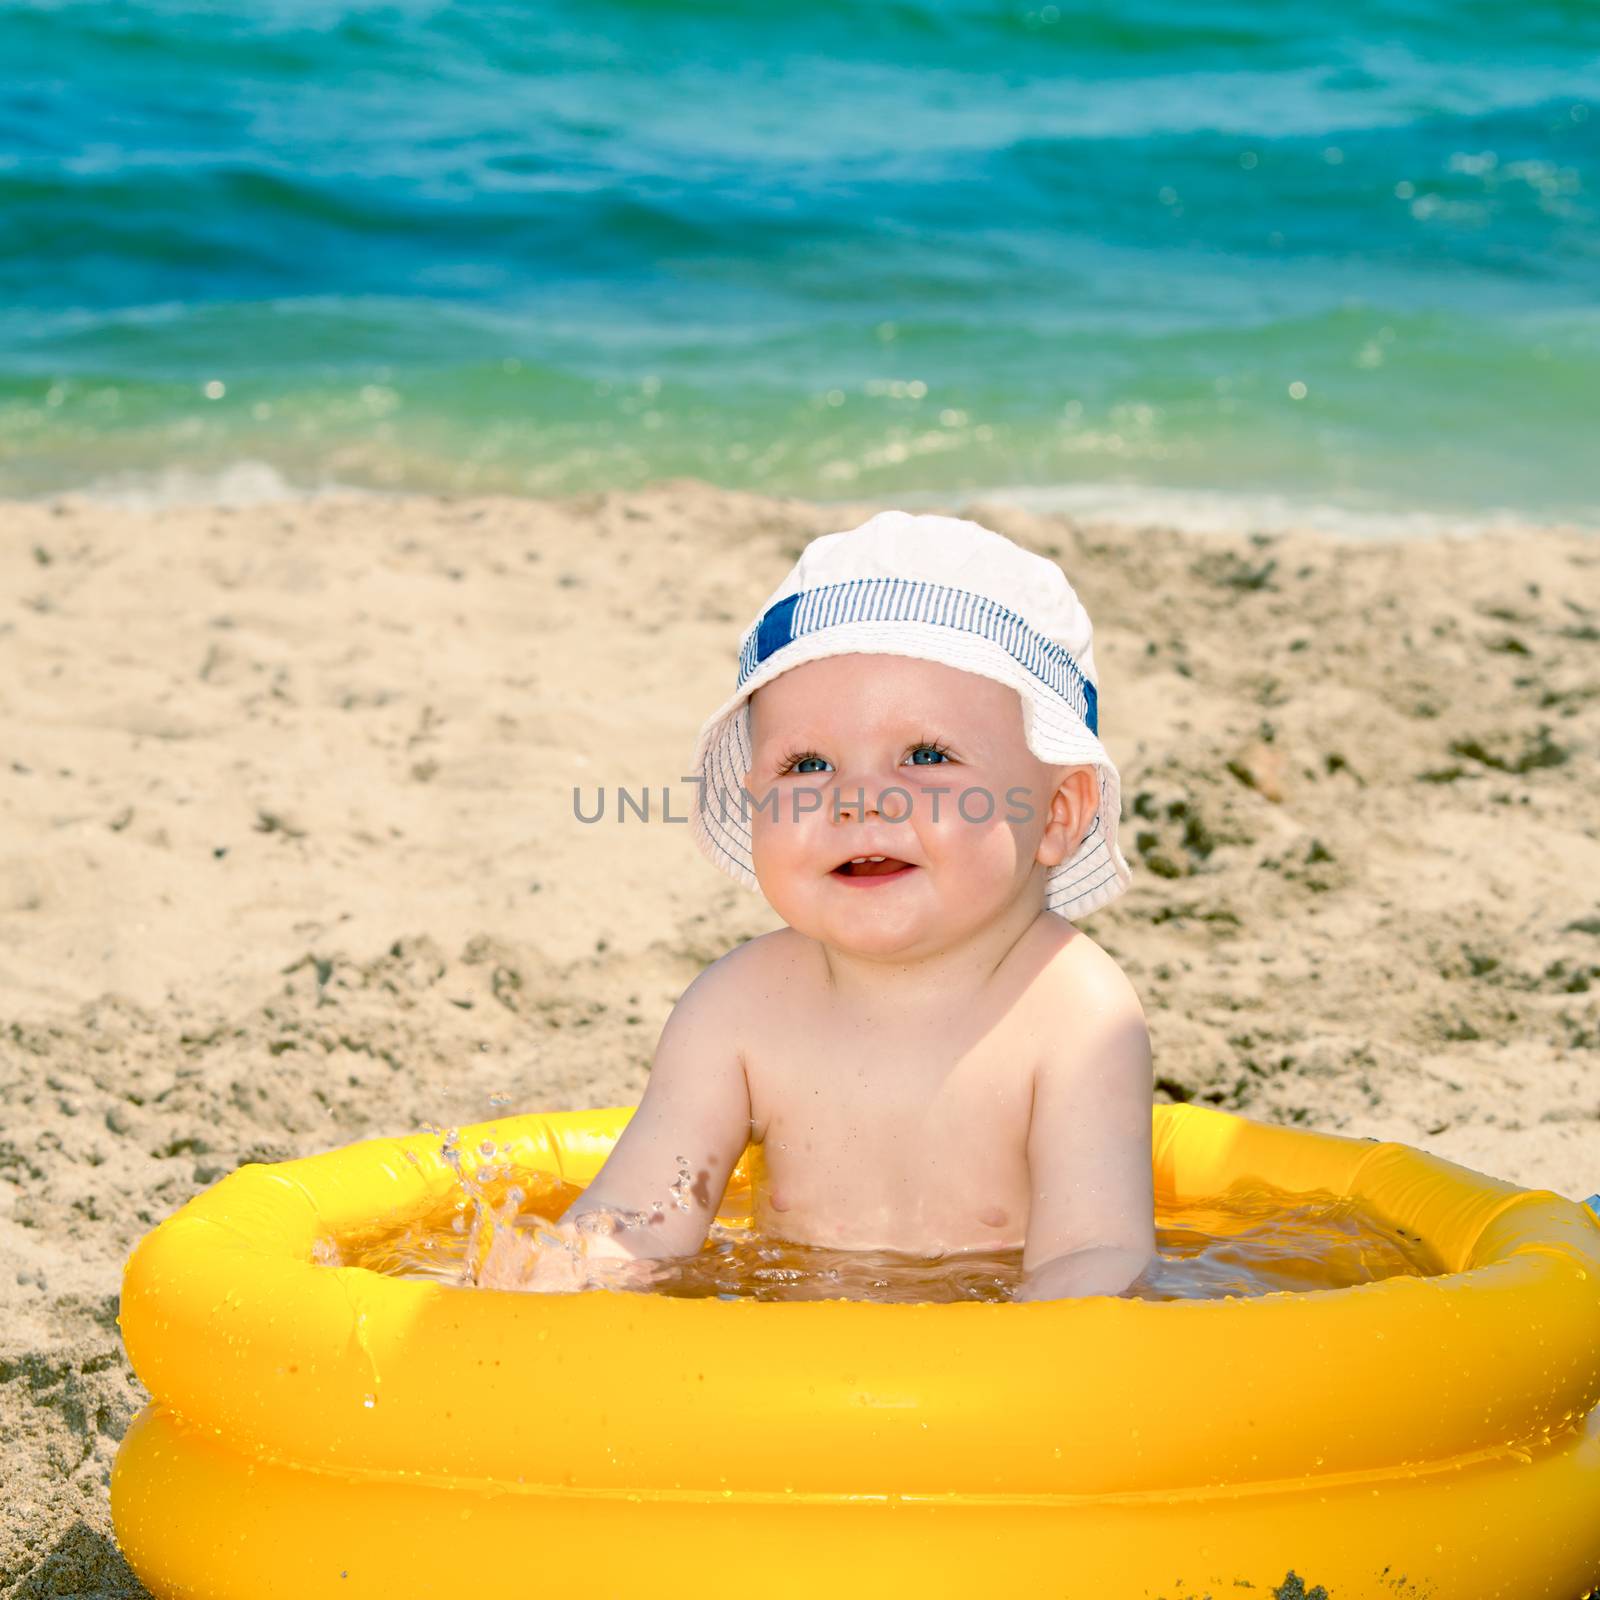 Infant on a beach by naumoid